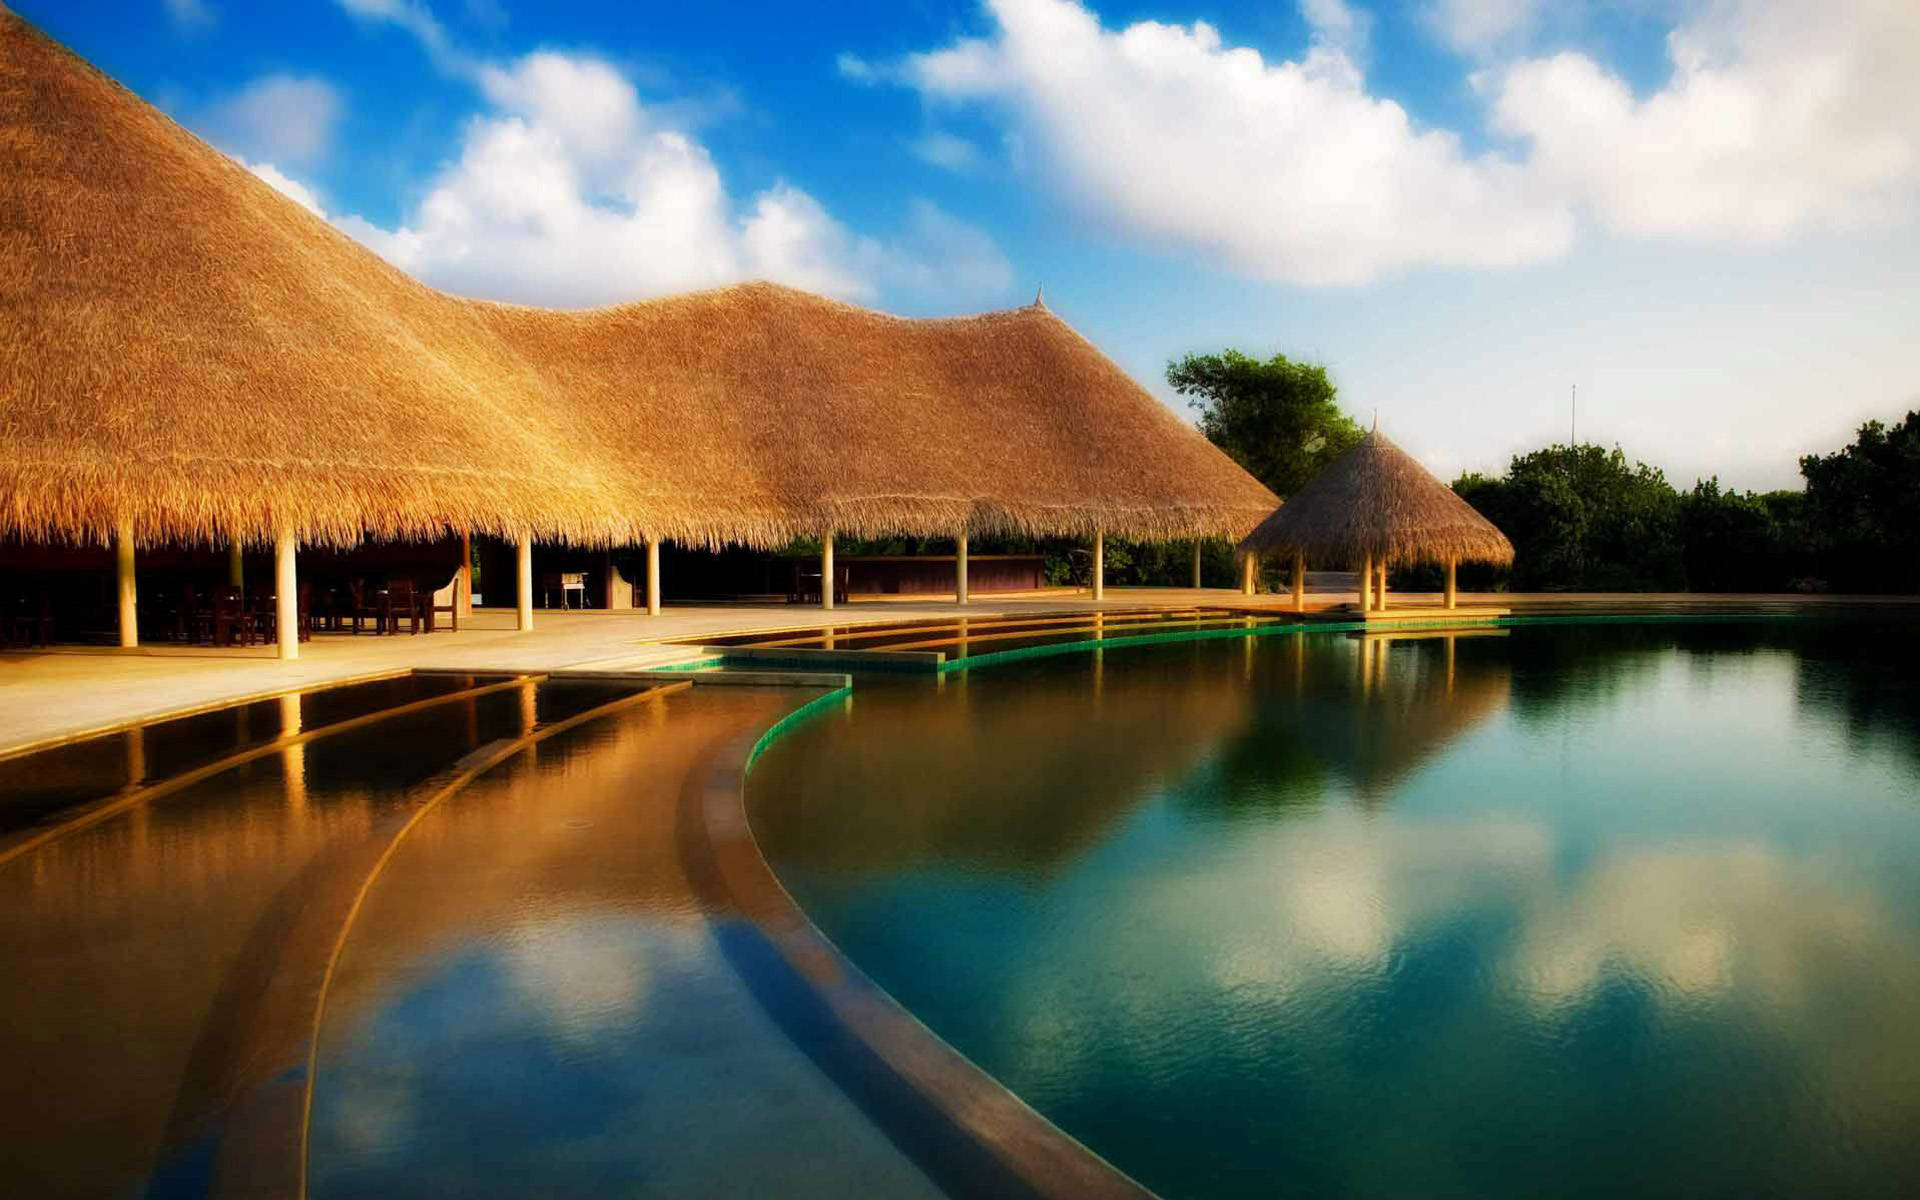 Cinnamon island. J Resort Alidhoo Мальдивы. Синамон Айланд Алидху. Интерконтиненталь Мальдивы.